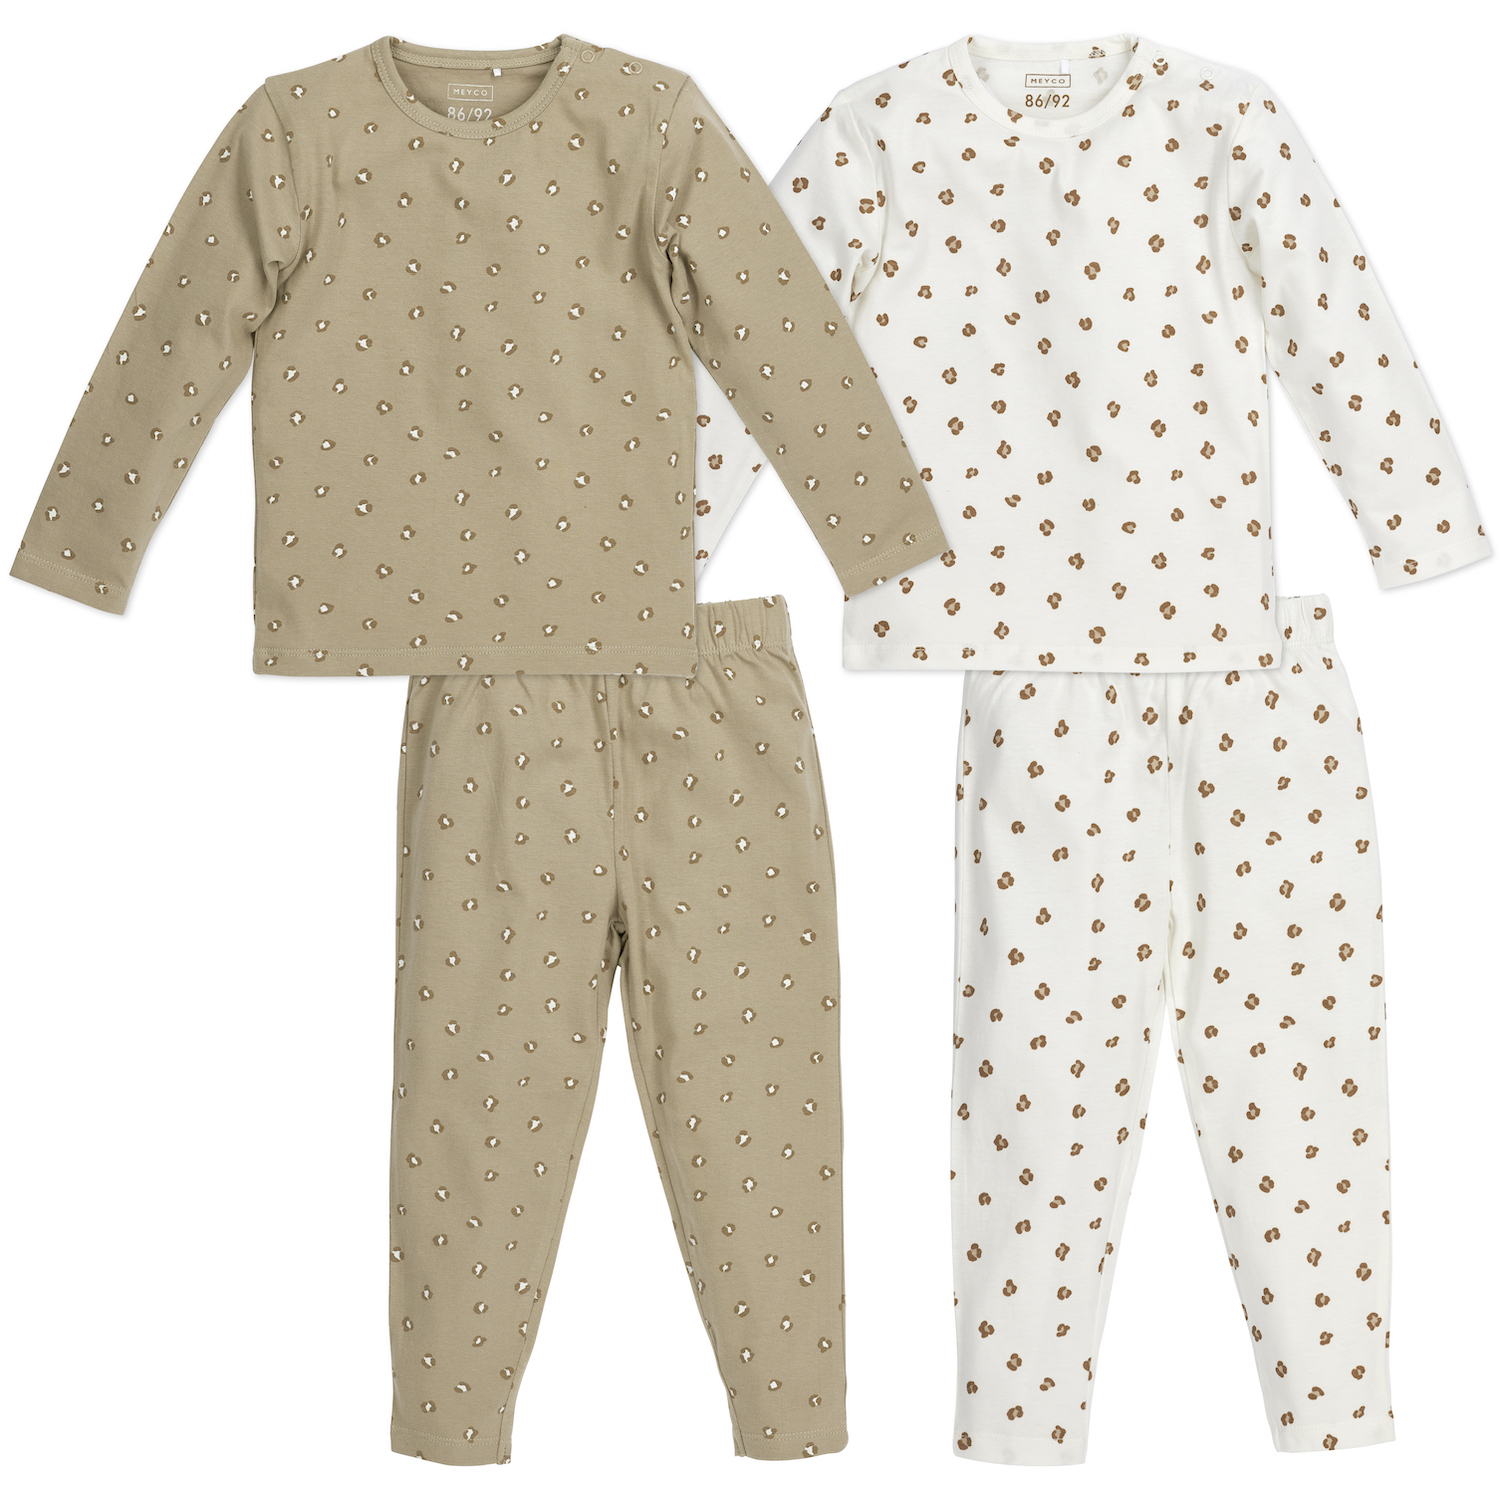 Pyjama 2-pack Mini Panther - Offwhite/Sand - Größe 98/104